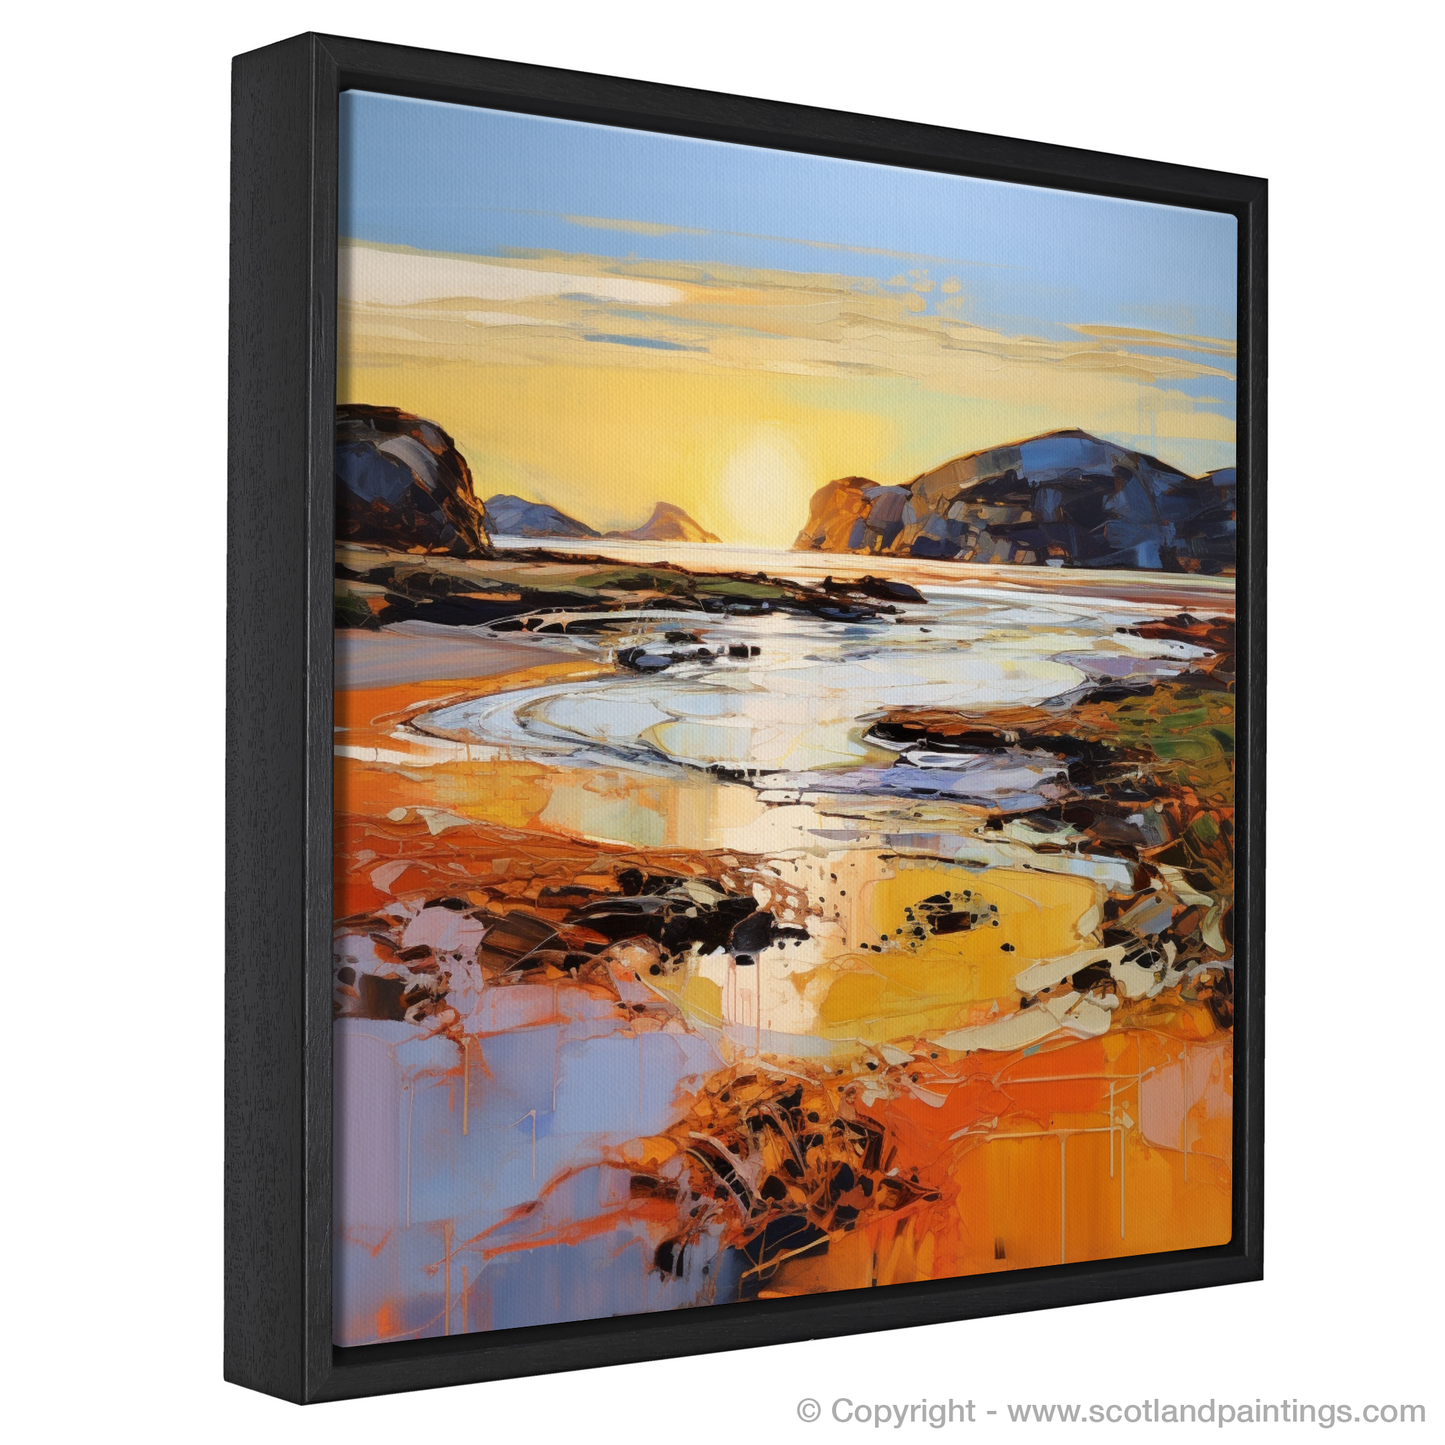 Painting and Art Print of Kiloran Bay at golden hour entitled "Golden Hour at Kiloran Bay: An Expressionist Escape".